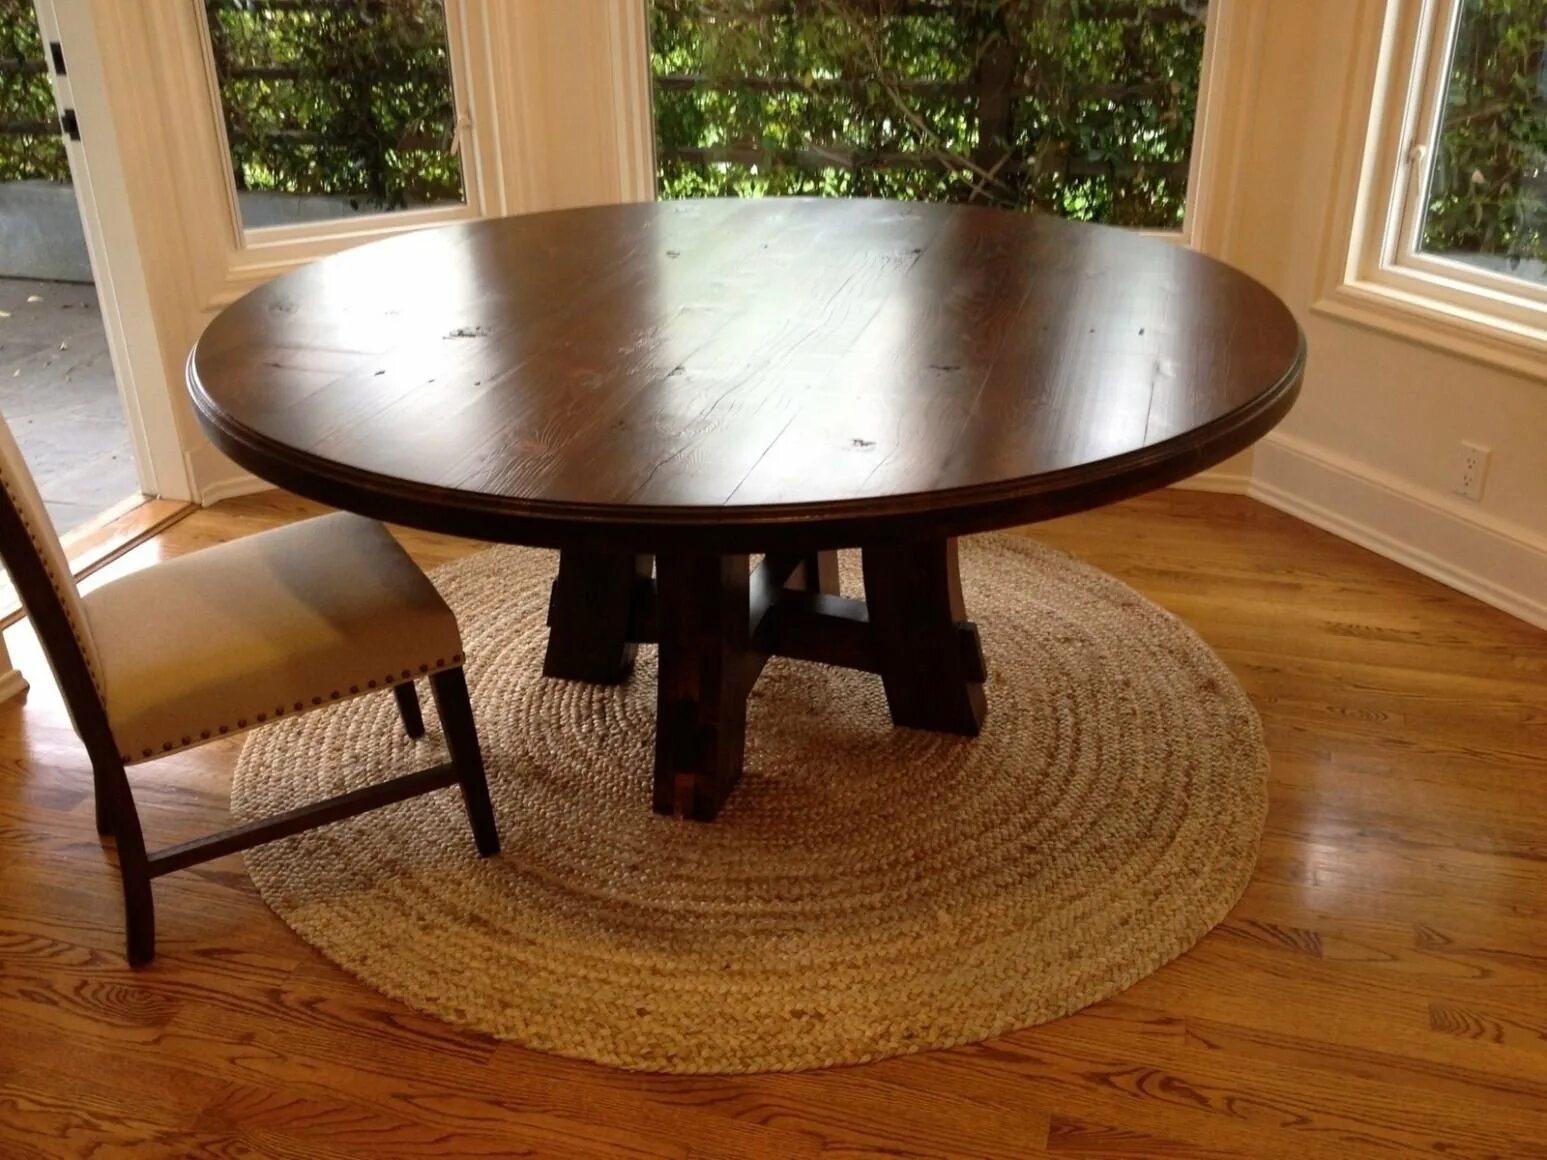 Что такое раунд тейбл (Round Table). Круглый деревянный стол. Круглый стол в интерьере. Круглый деревянный столик.